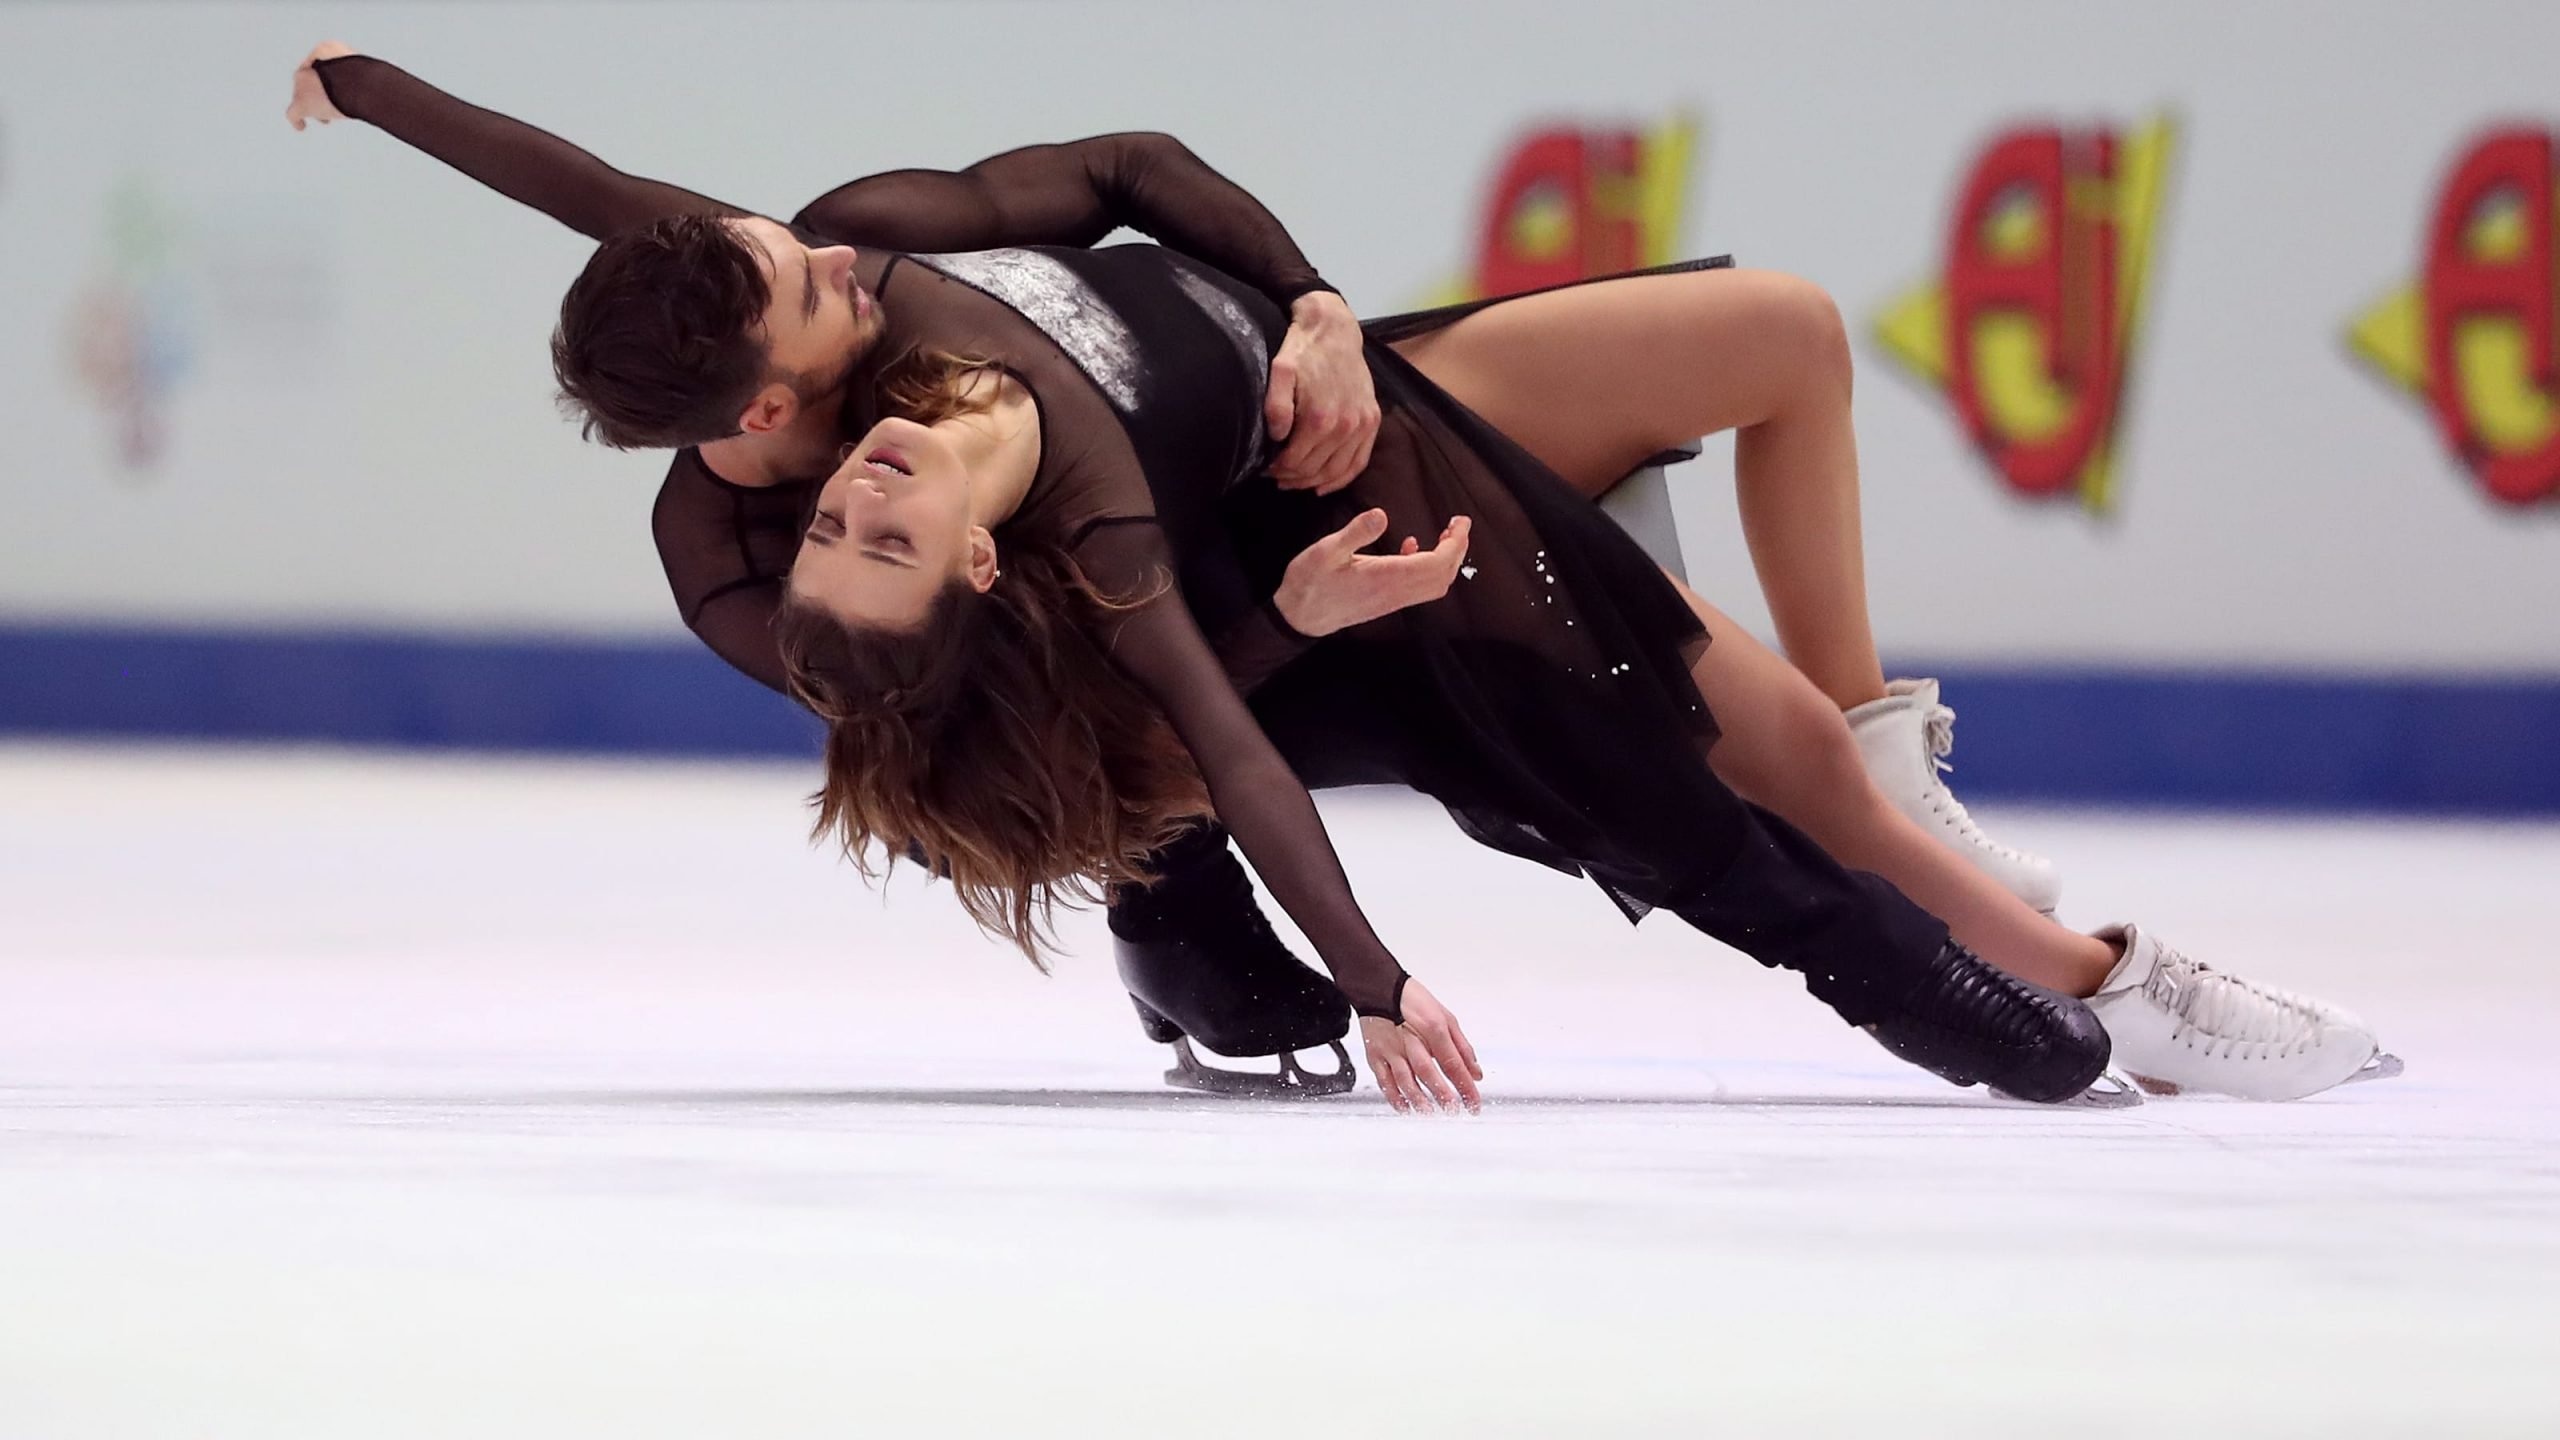 Pair Skating: Rhythm dance, Pair skaters, Figure skating routine. 2560x1440 HD Background.